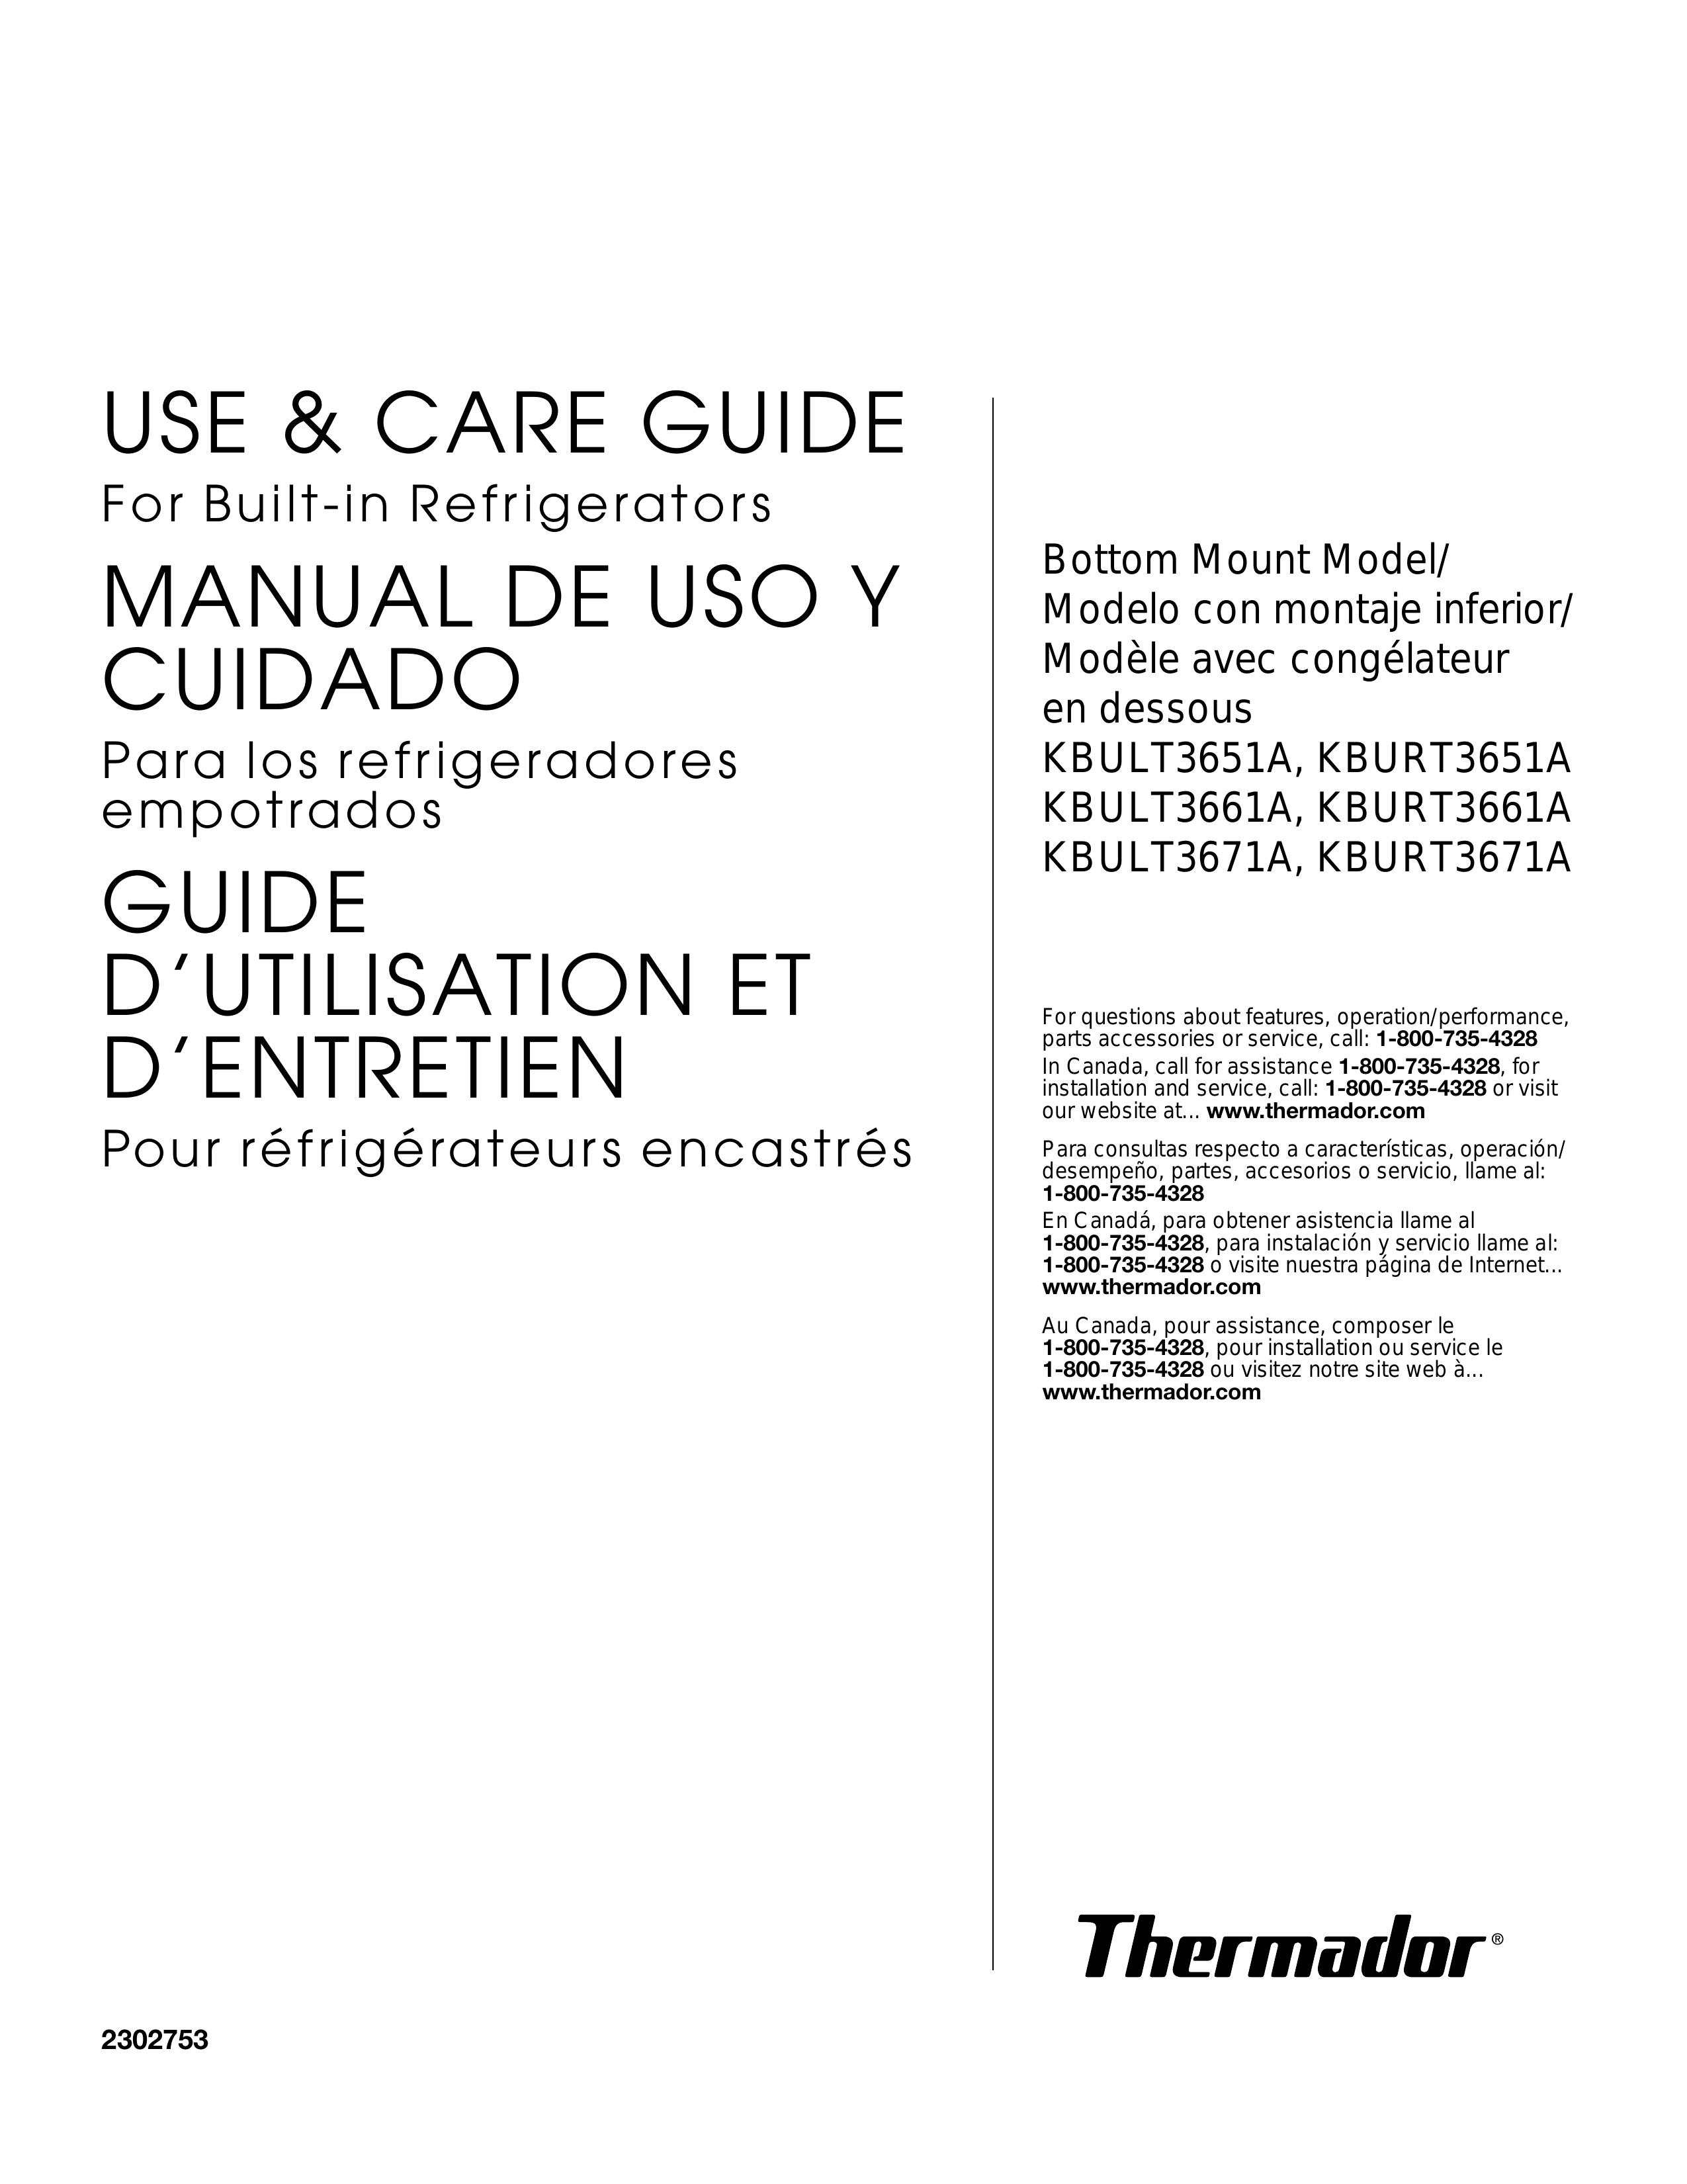 Thermador KBURT3661A Refrigerator User Manual